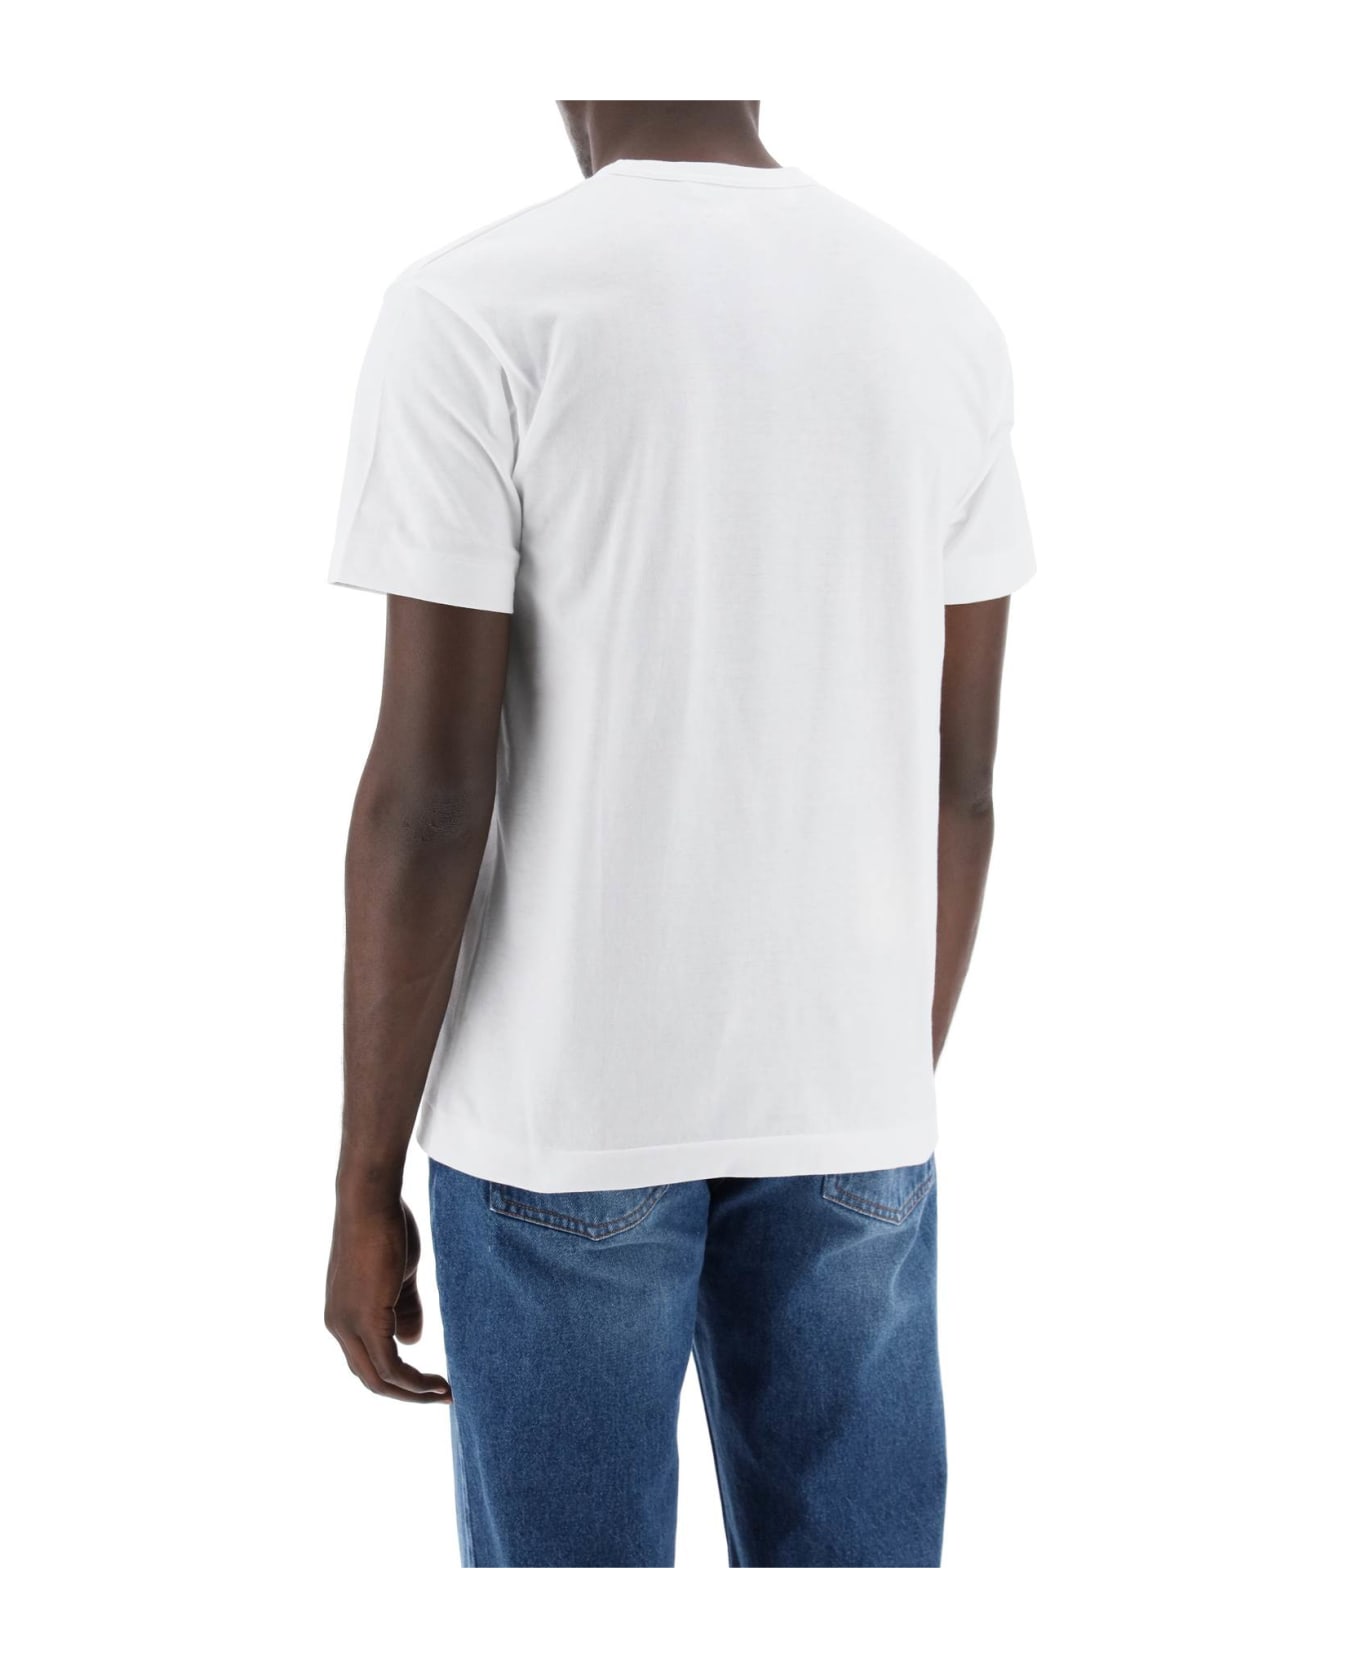 Comme des Garçons Play Heart Camou T-shirt - WHITE (White)